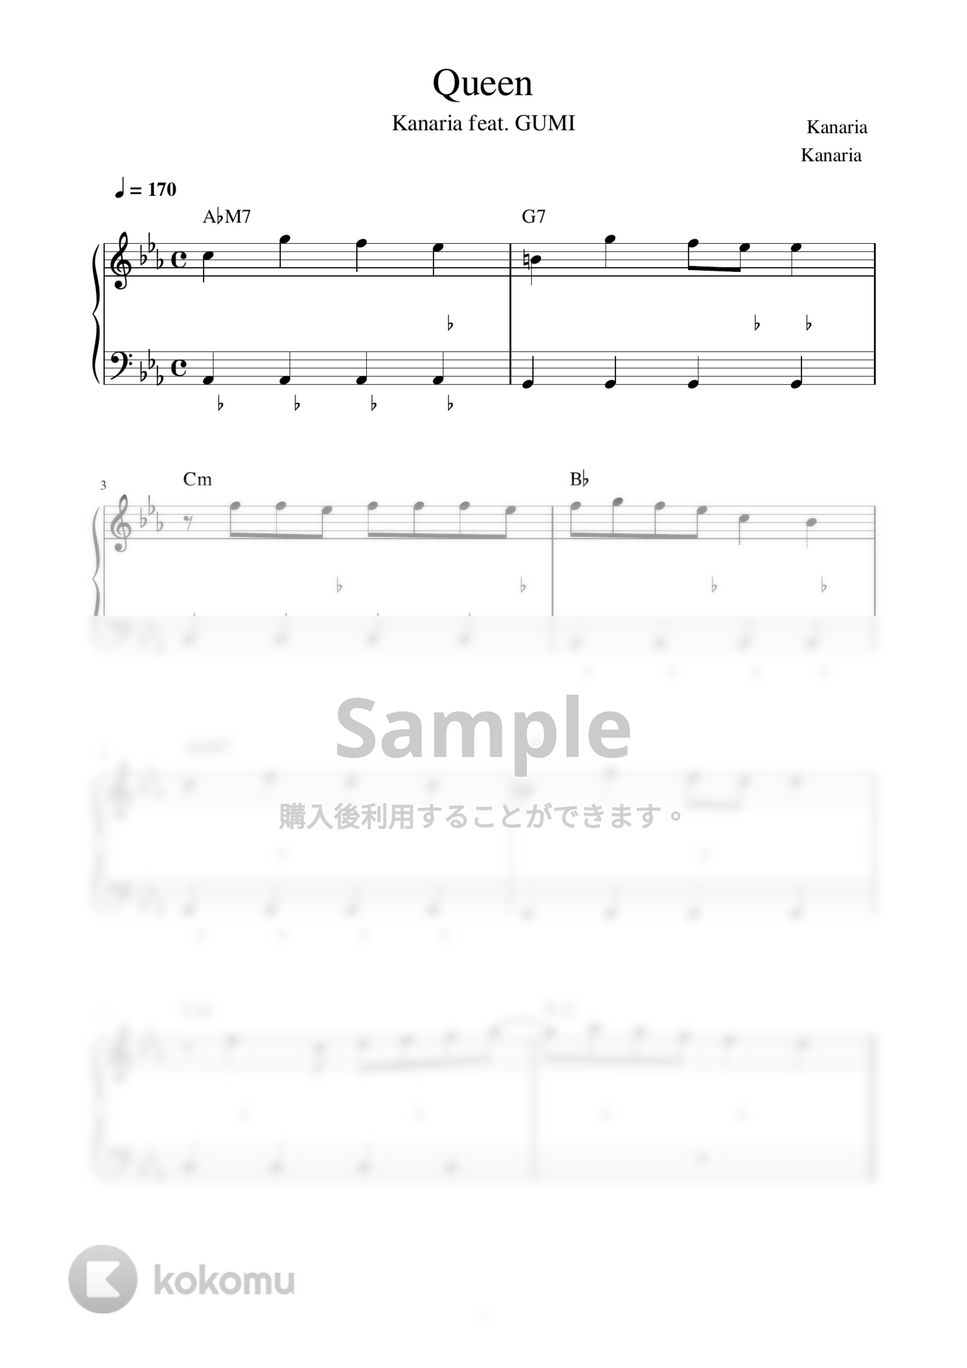 Kanaria feat. GUMI - QUEEN (ピアノ楽譜 / かんたん両手 / 歌詞付き / ドレミ付き / 初心者向き) by piano.tokyo